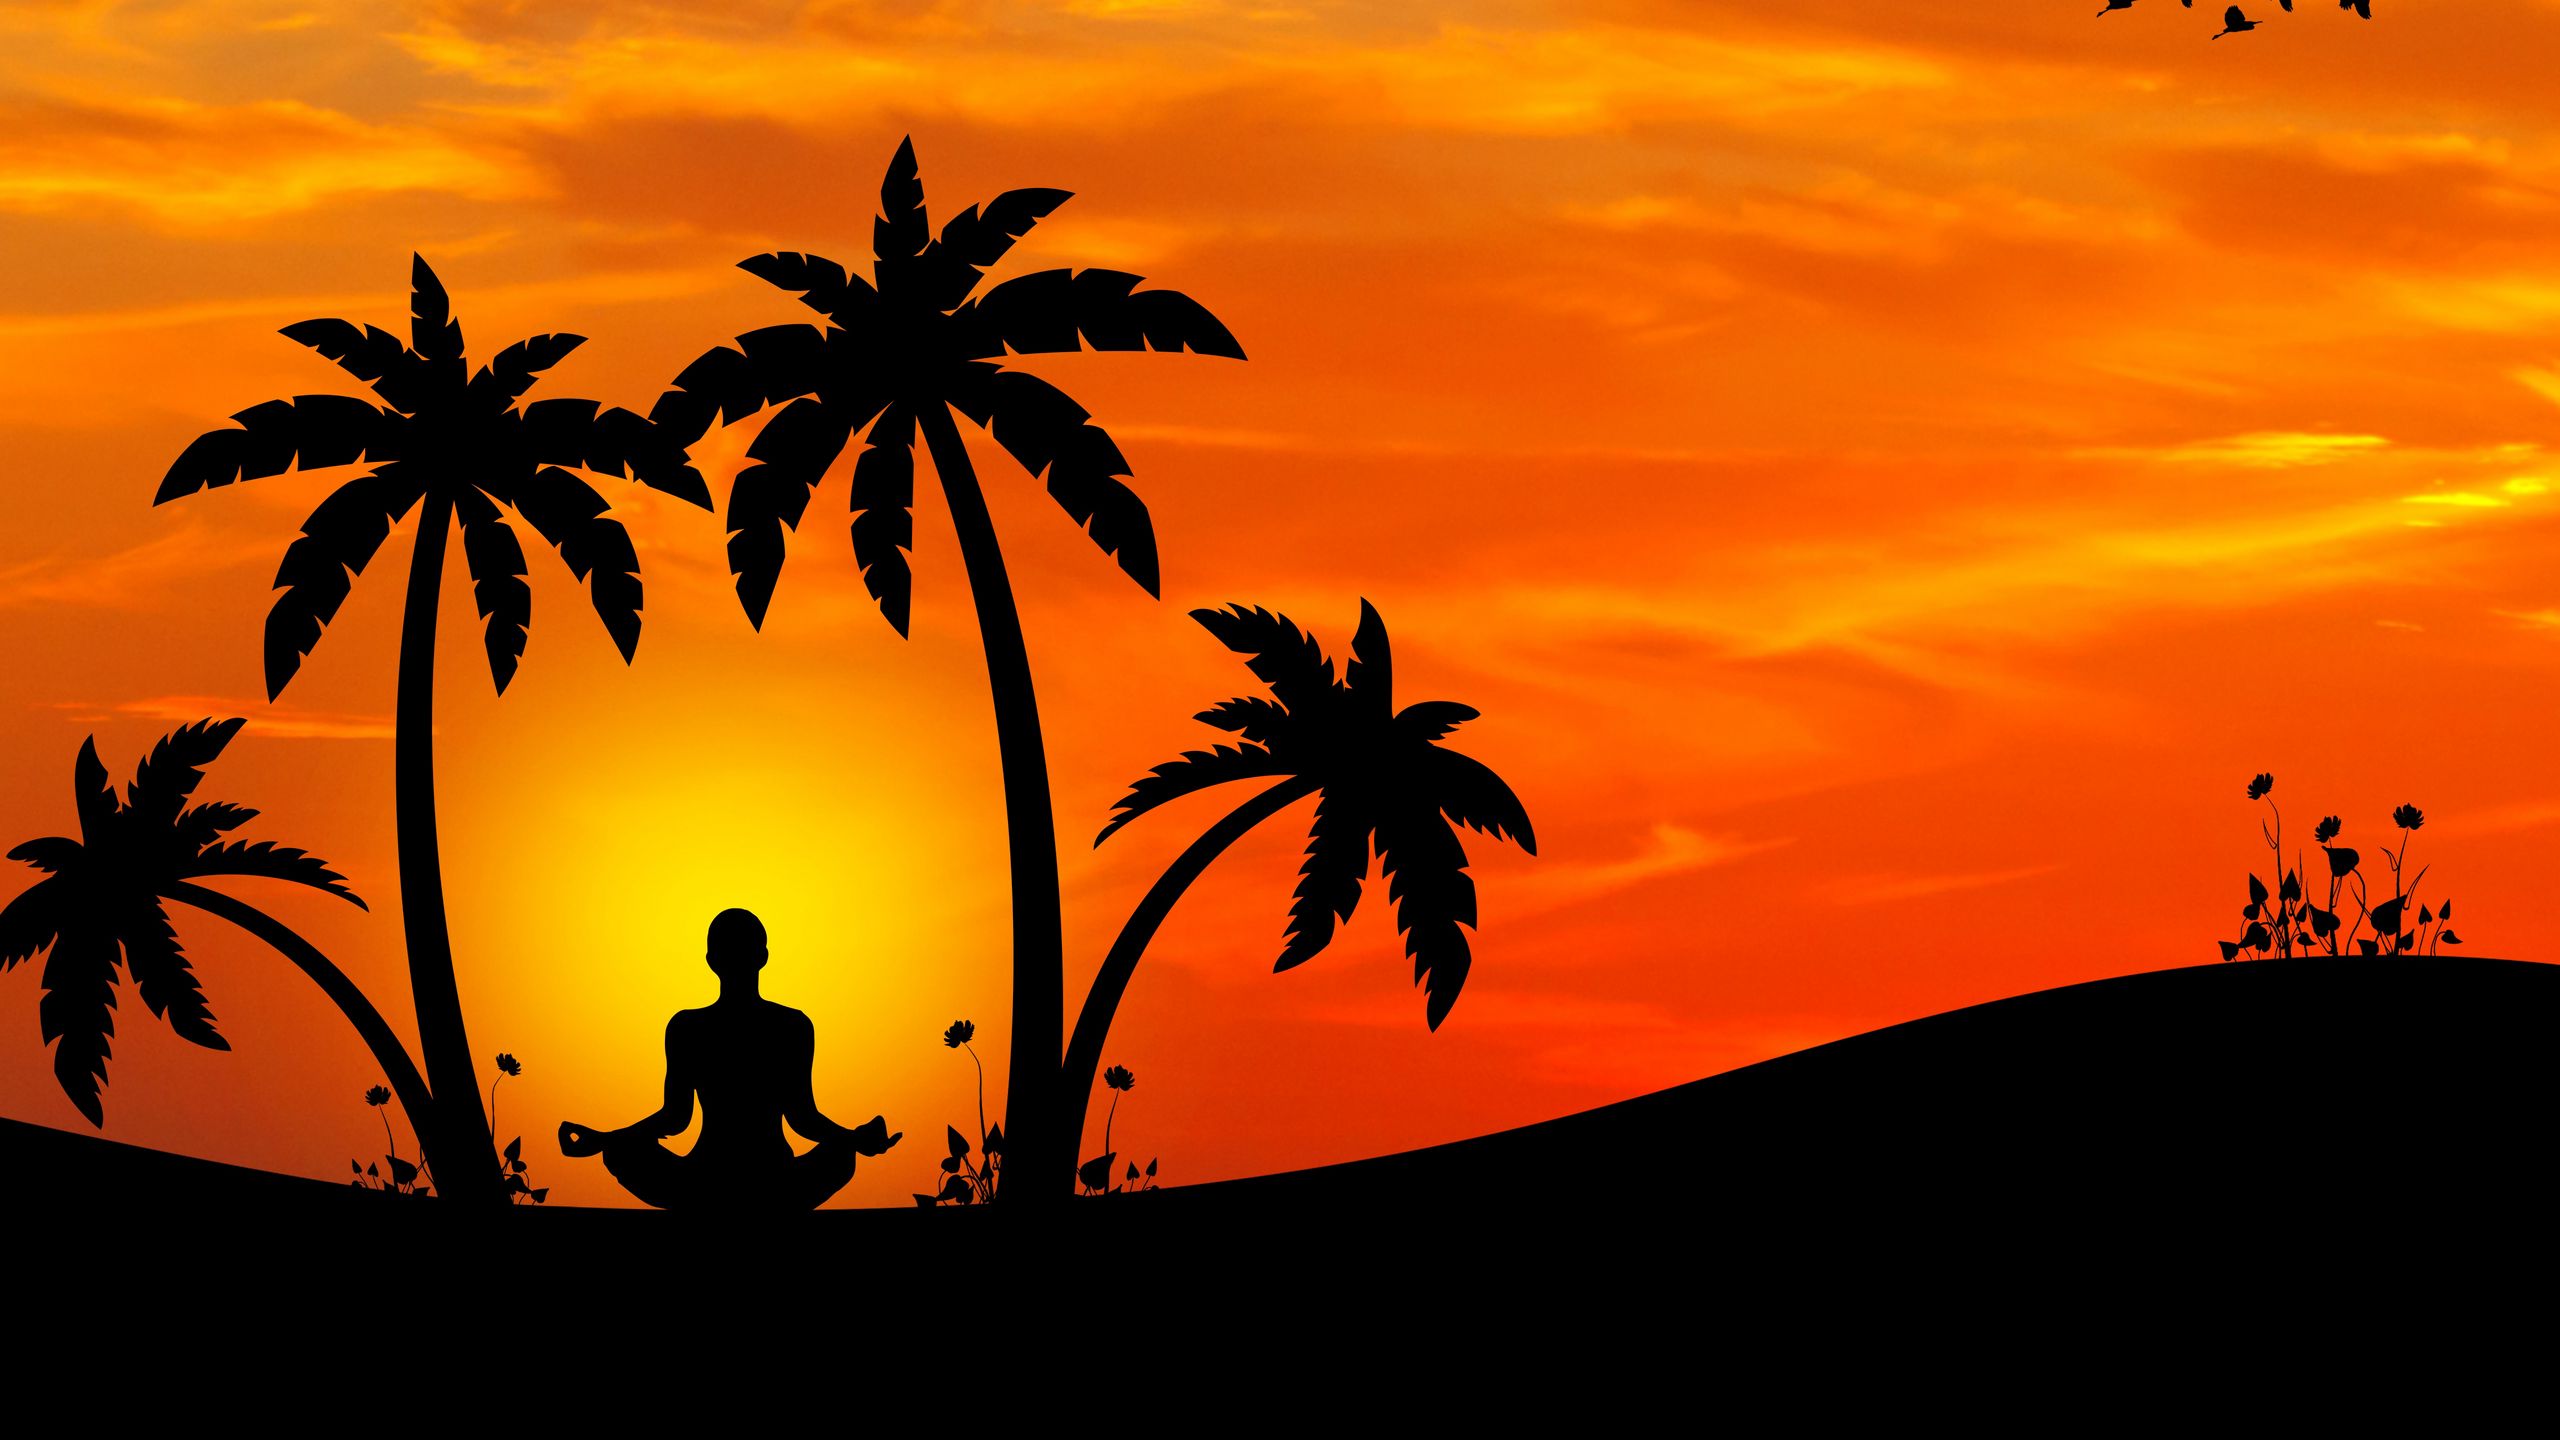 Download wallpaper 2560x1440 meditation yoga silhouette palm